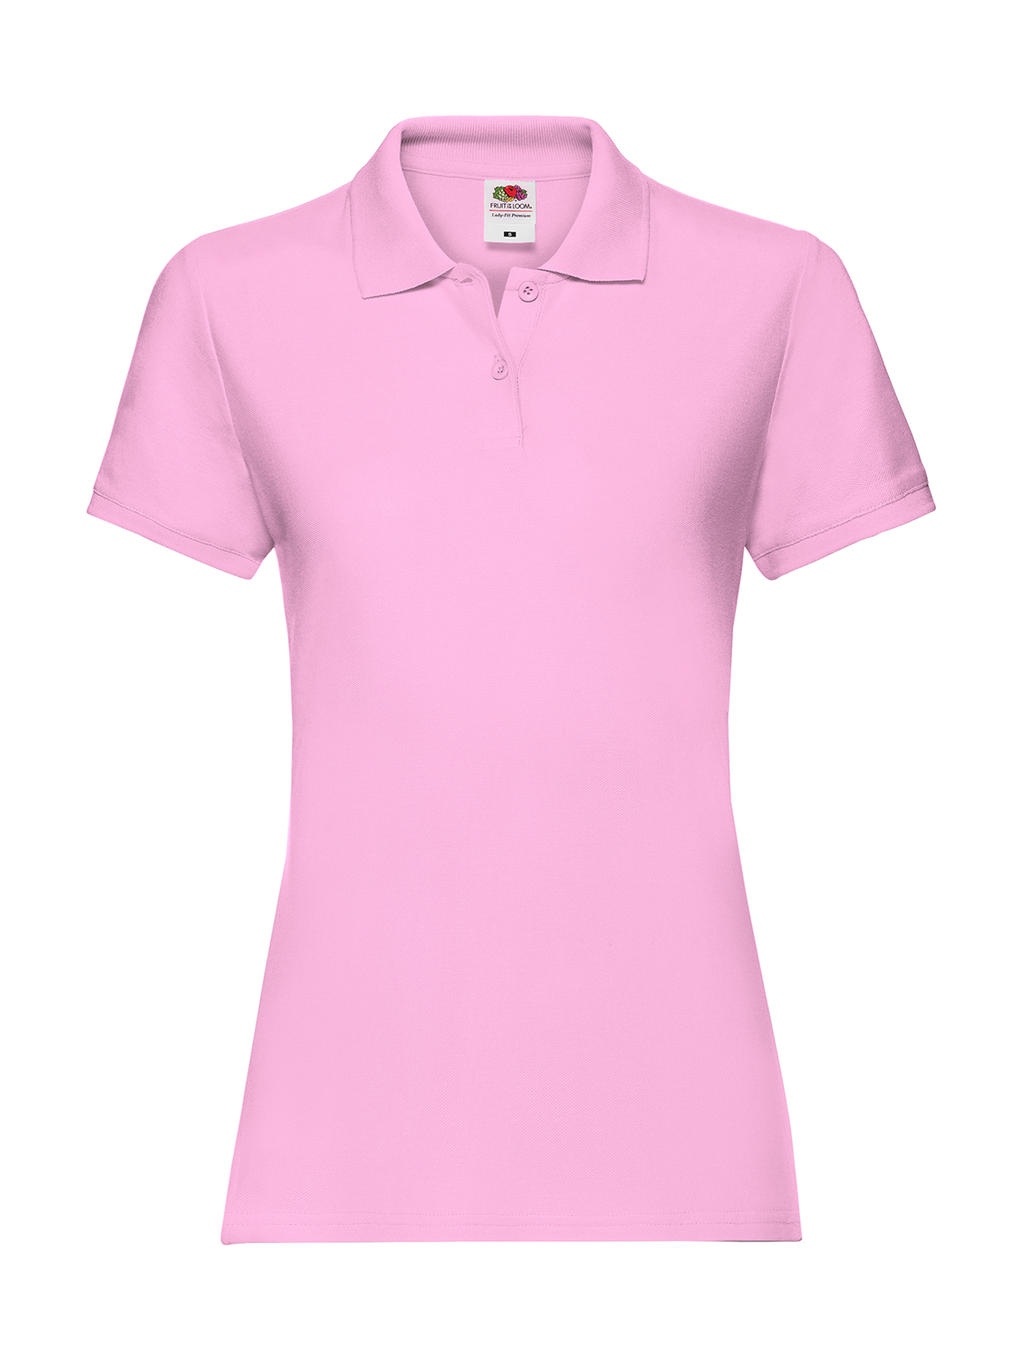  Ladies Premium Polo in Farbe Light Pink